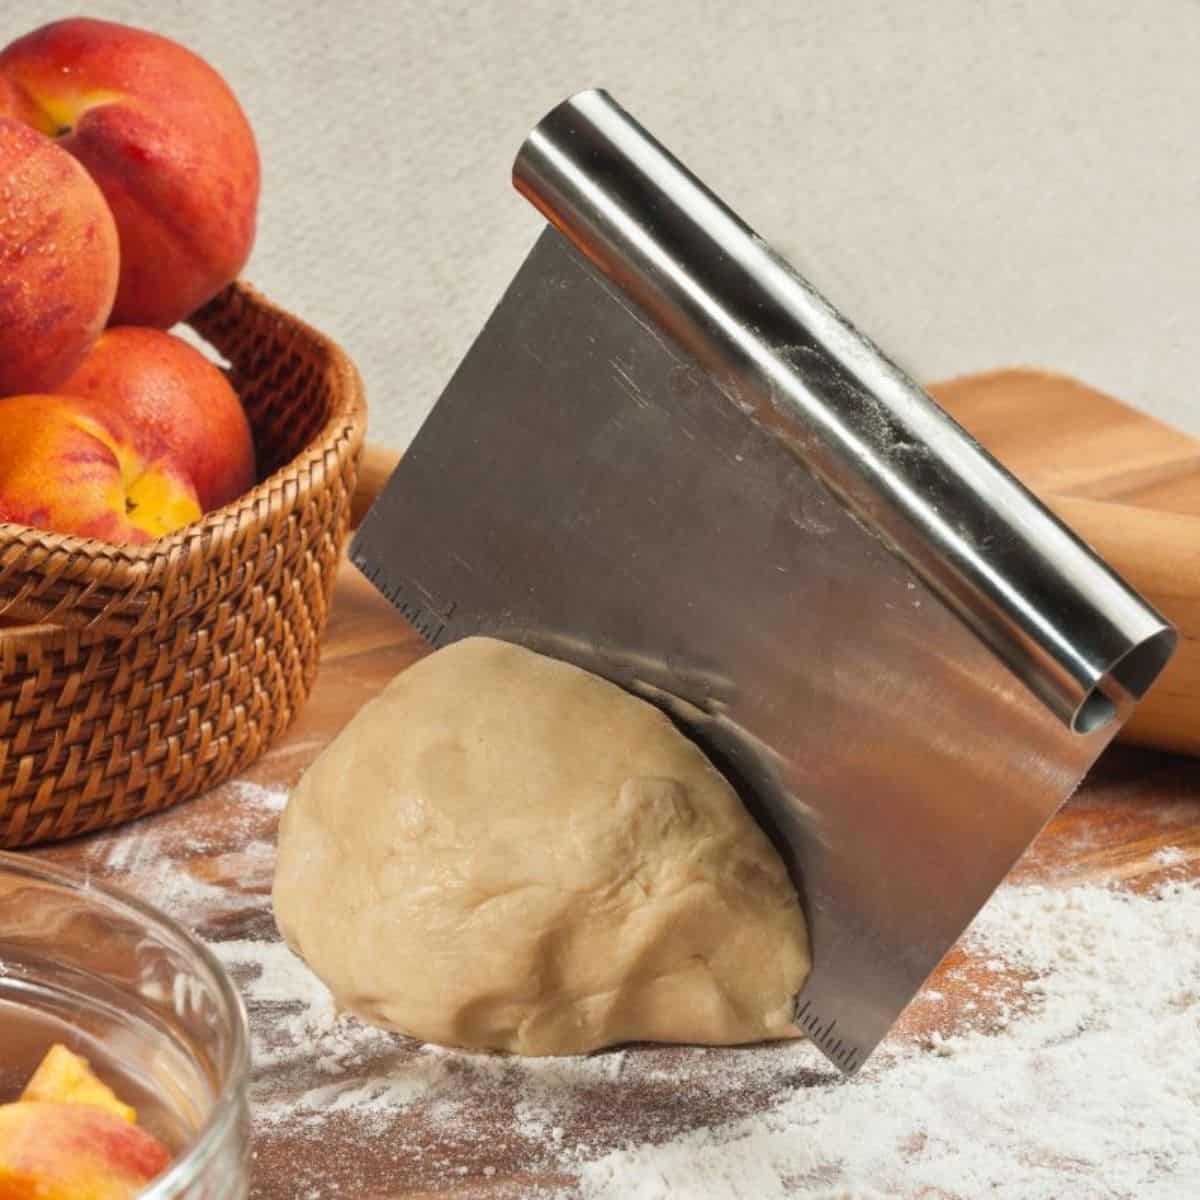 https://breadopedia.com/wp-content/uploads/2020/09/best-dough-scraper-featured.jpg